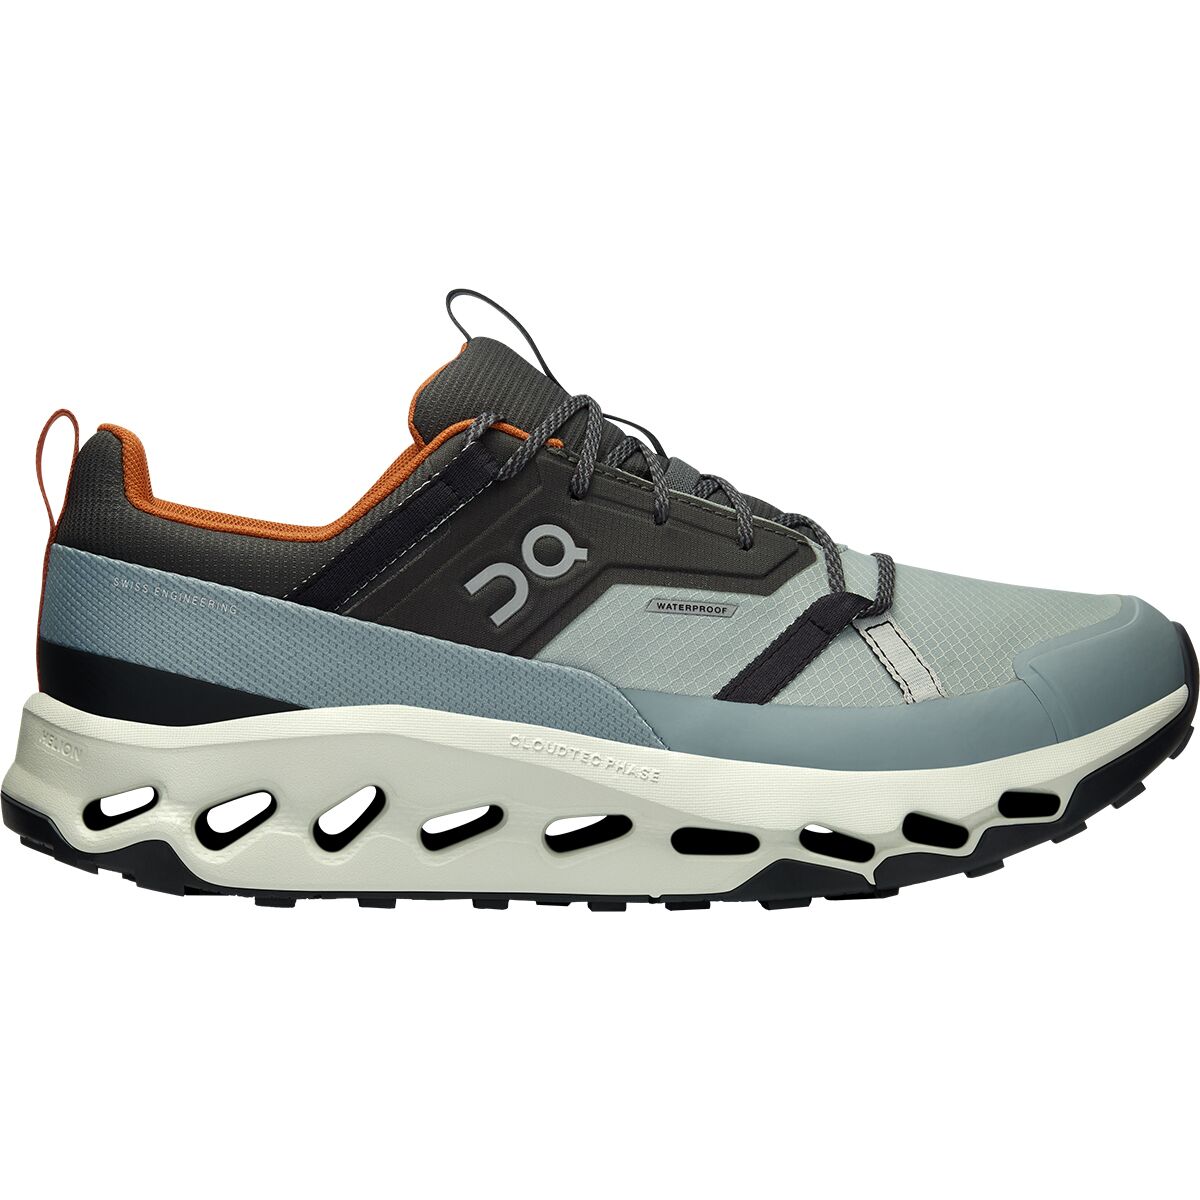 Cloudhorizon Waterproof Shoe - Men